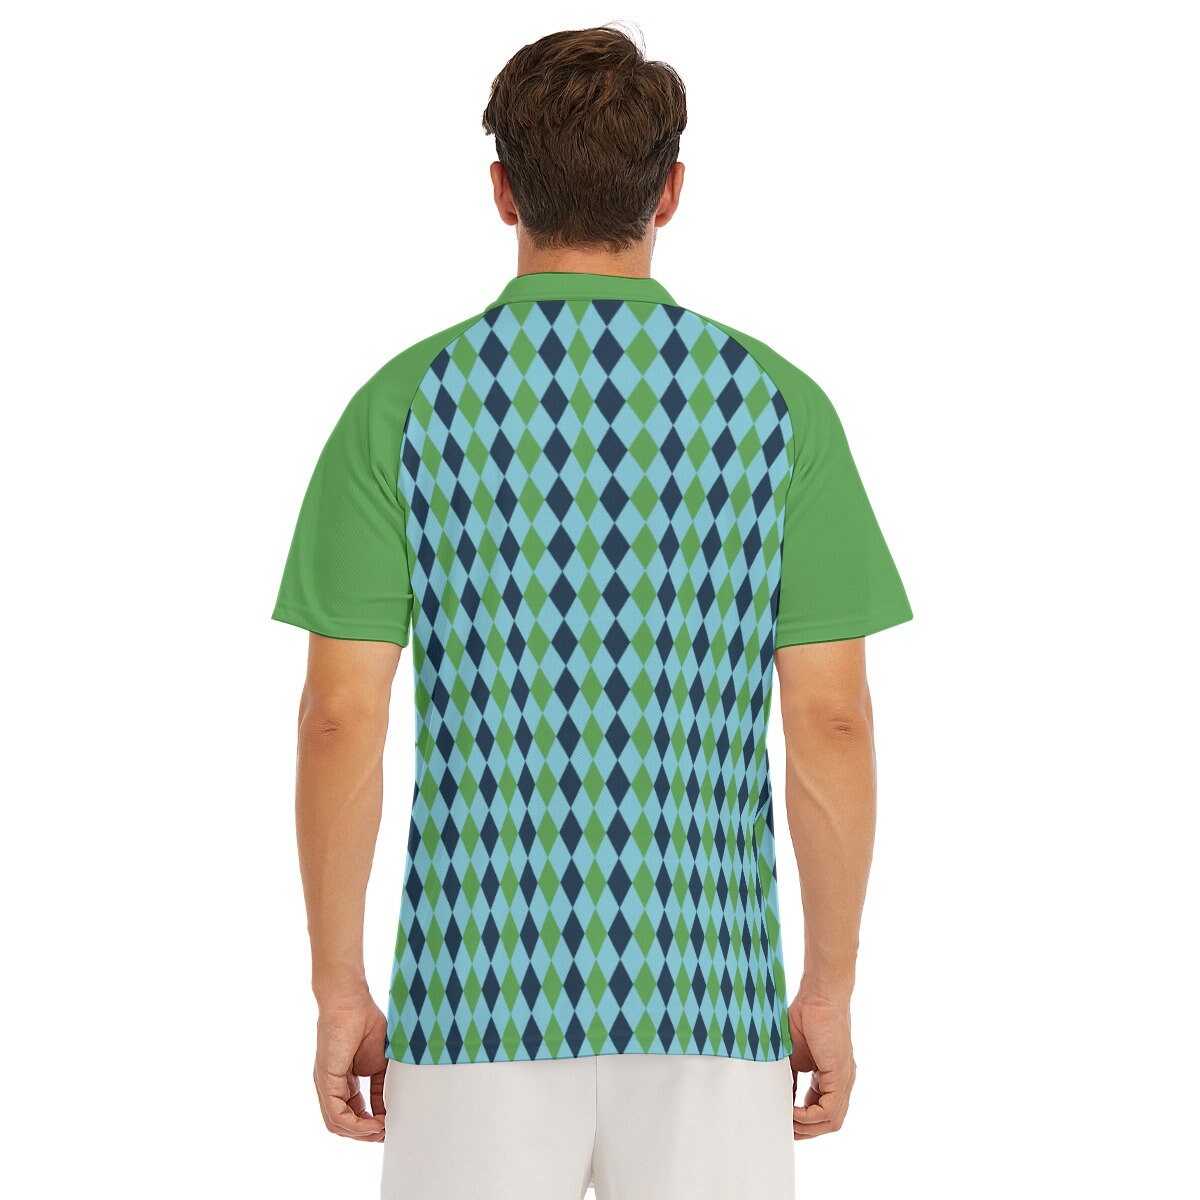 Polo Shirt, Men's Polo Shirt, Vintage Polo, Retro Polo Shirt, 60s Tops men, Green Blue Geometric Shirt, Men's Vintage Shirt, Men's Knit Top